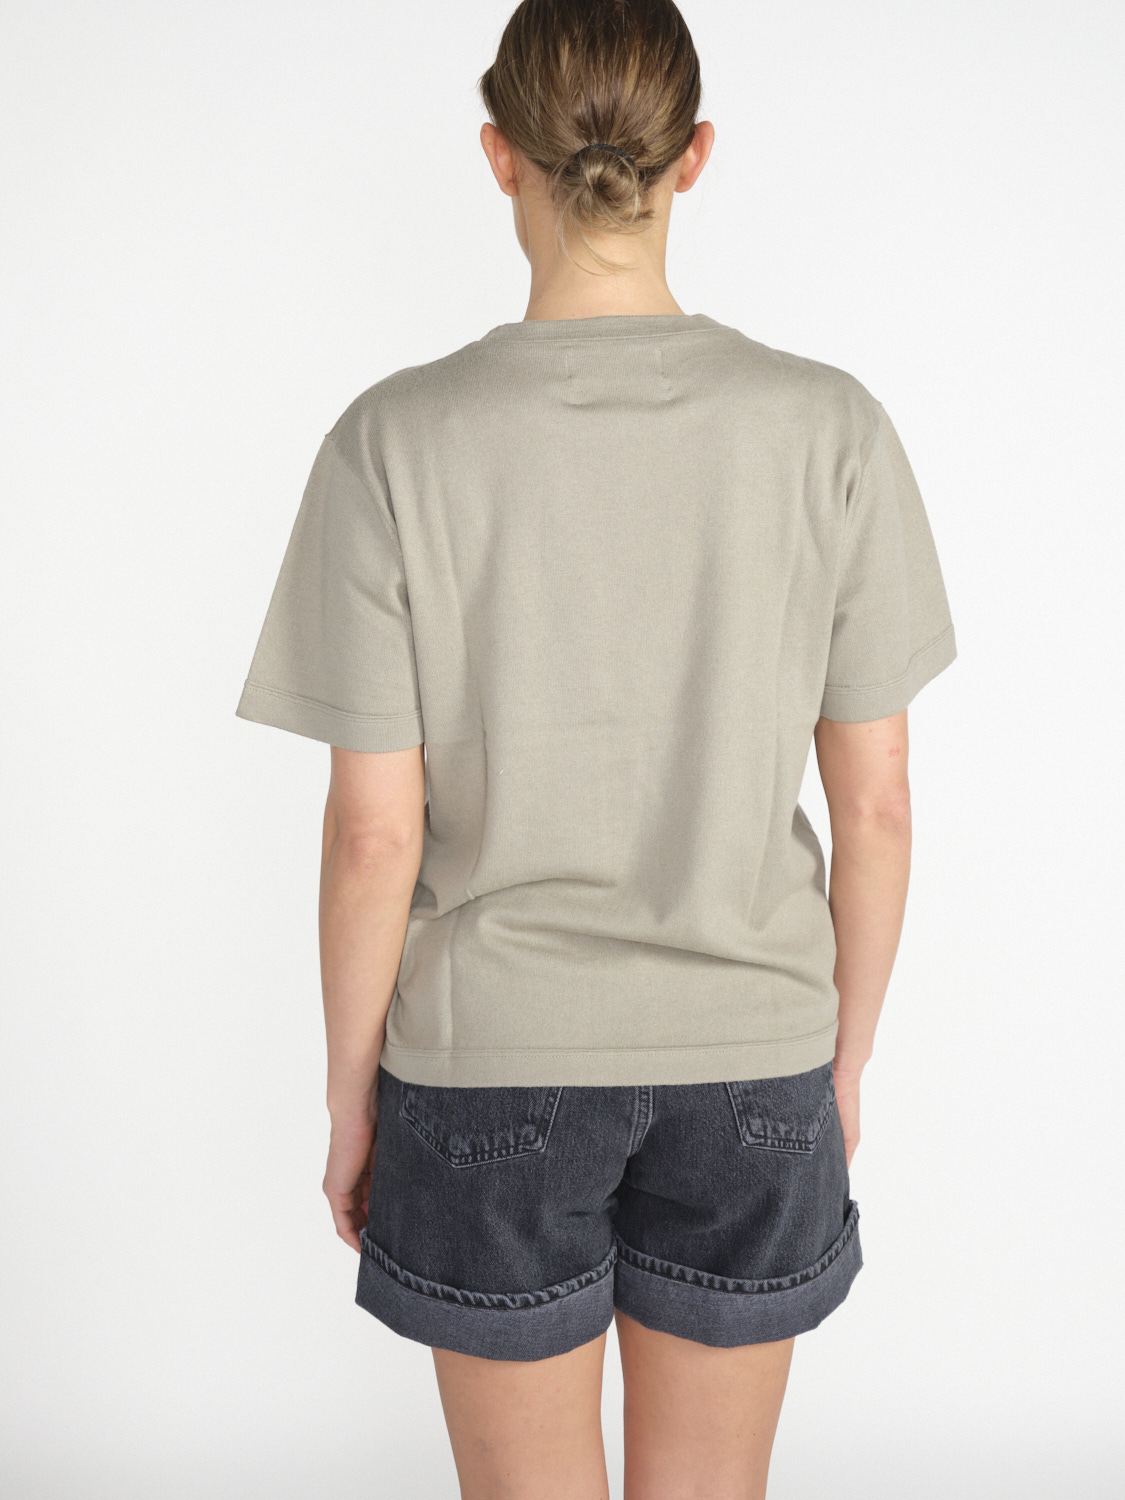 Extreme Cashmere n° 268 Cuba - wide T-shirt in cashmere-cotton blend hellgrün One Size